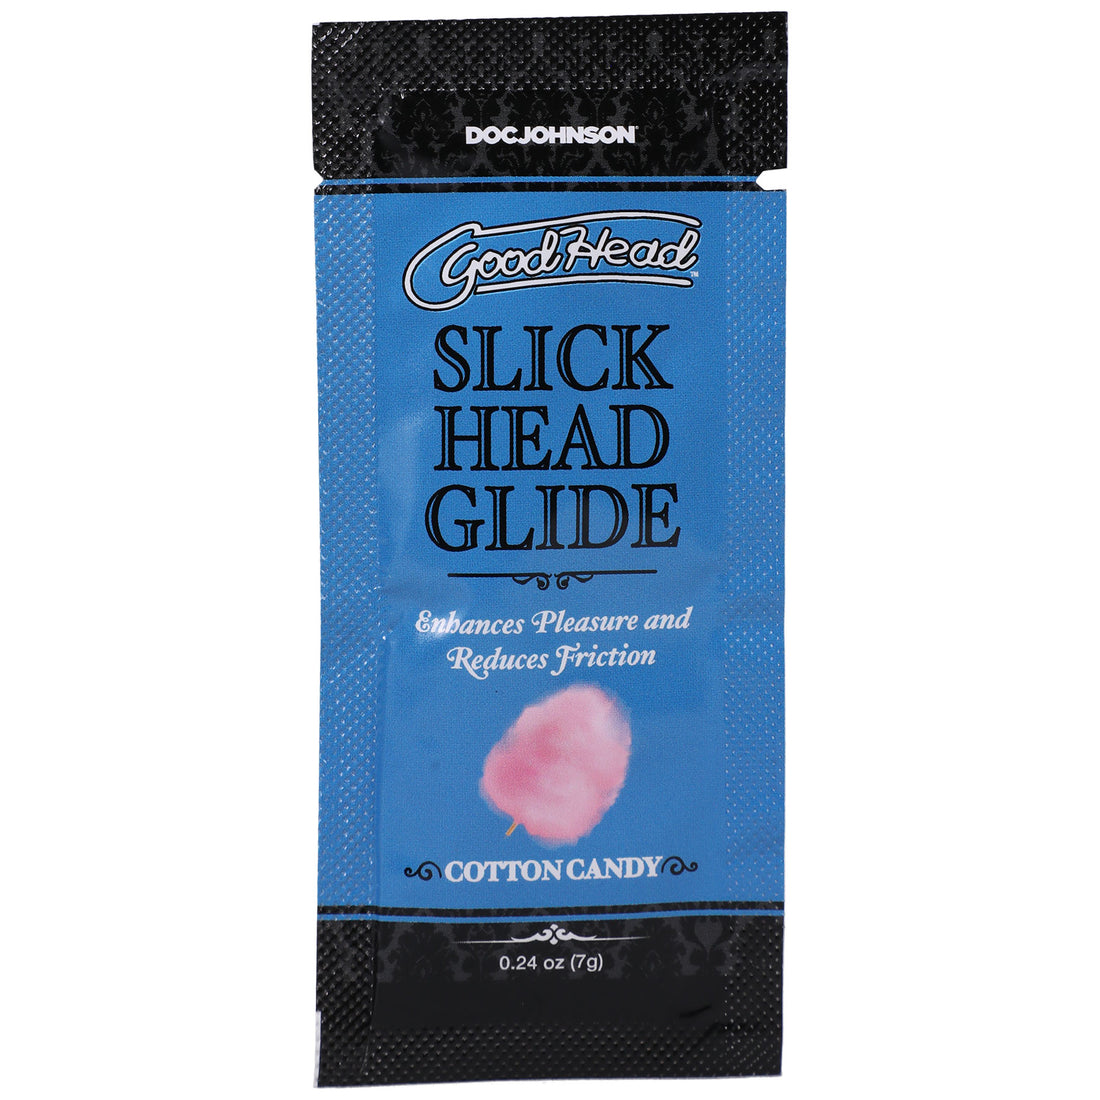 Goodhead - Slick Head Glide - Cotton Candy - 0.24 Oz DJ1387-12-BU